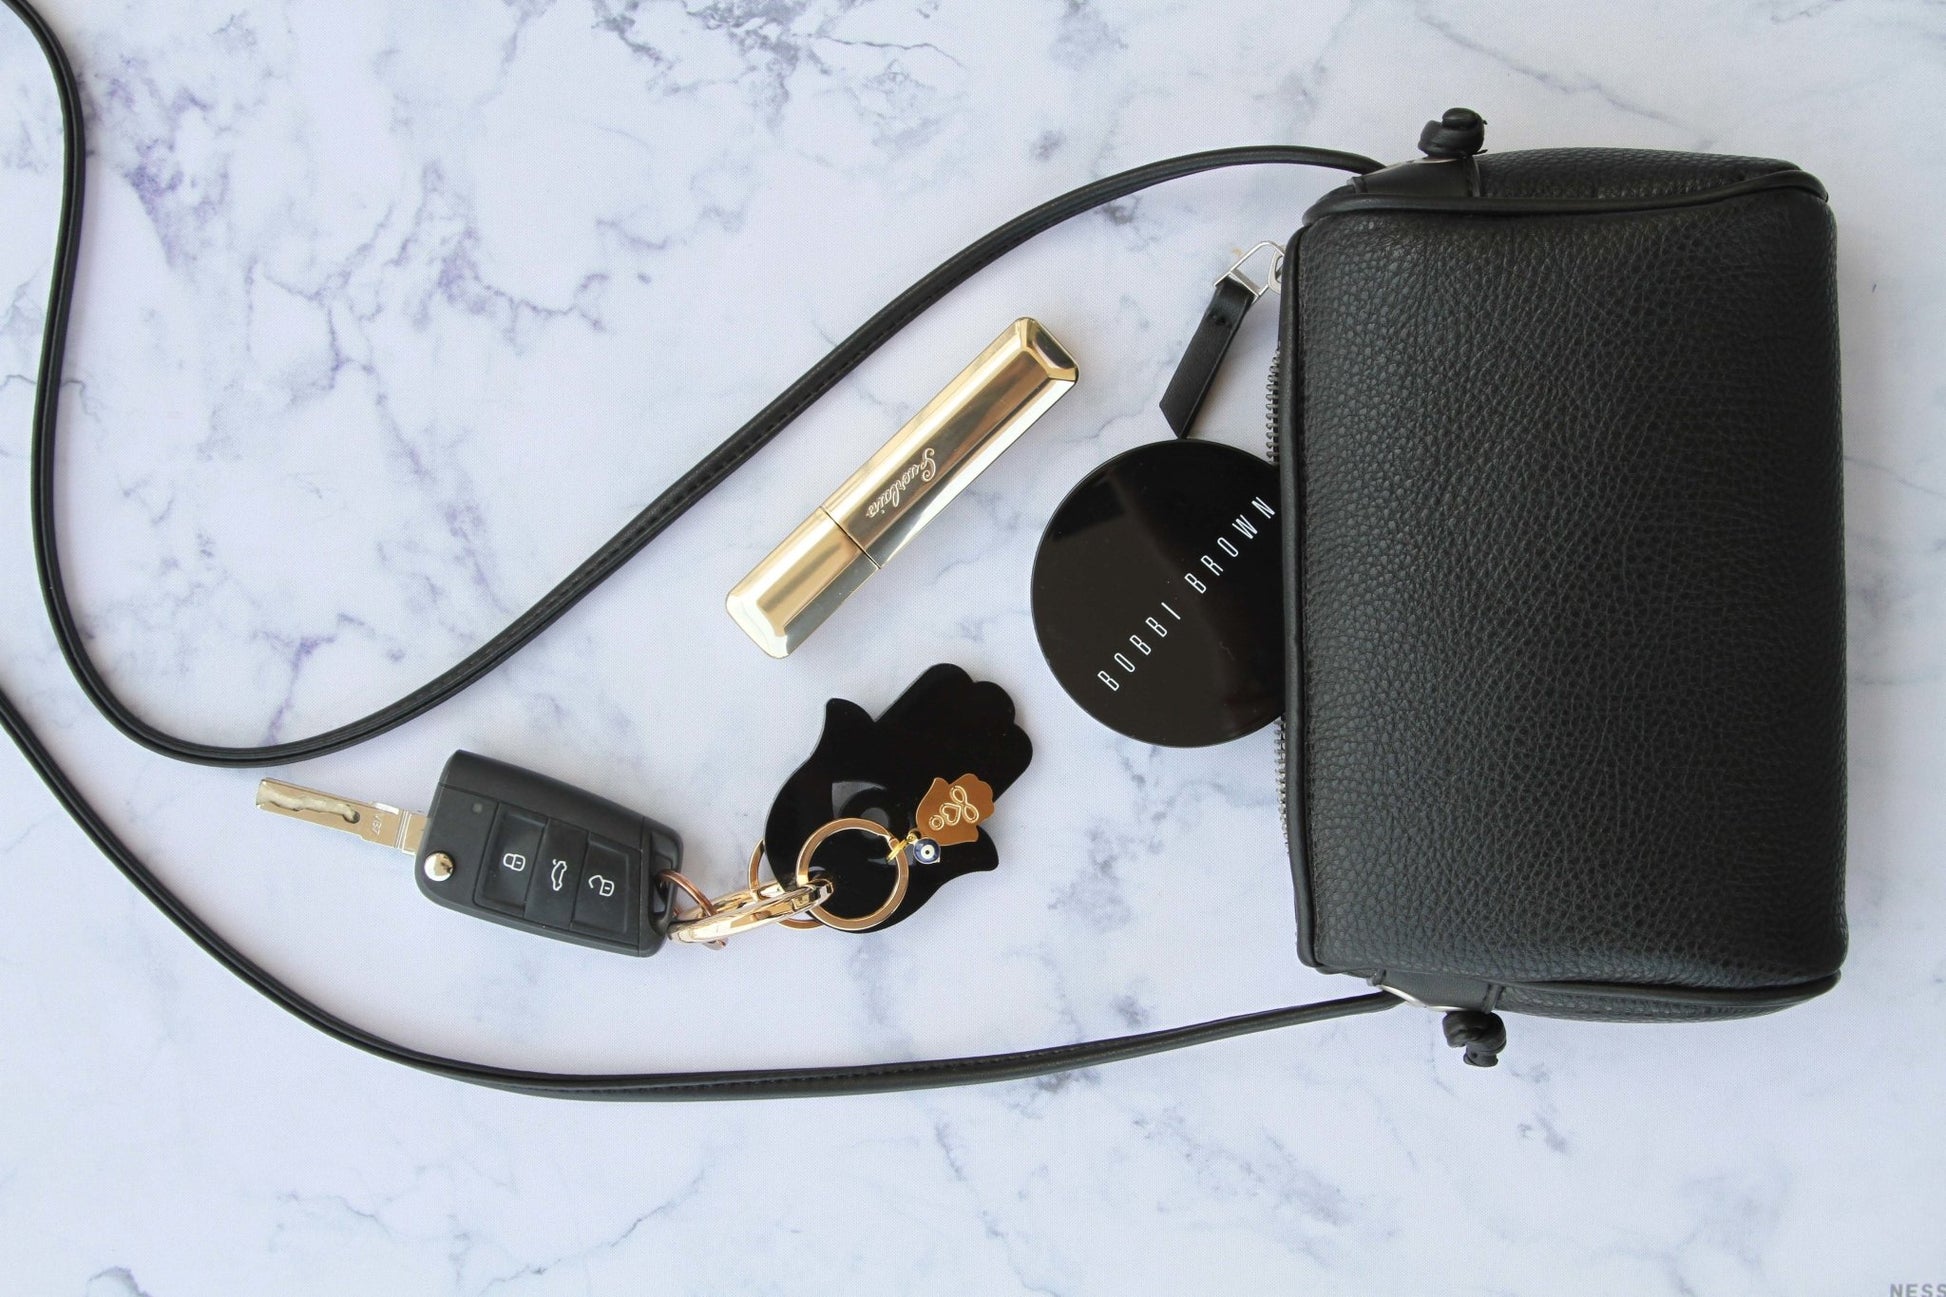 Black Acrylic Hamsa with Gold plated key holder & Hamsa with evil eye - stylish luck home decor